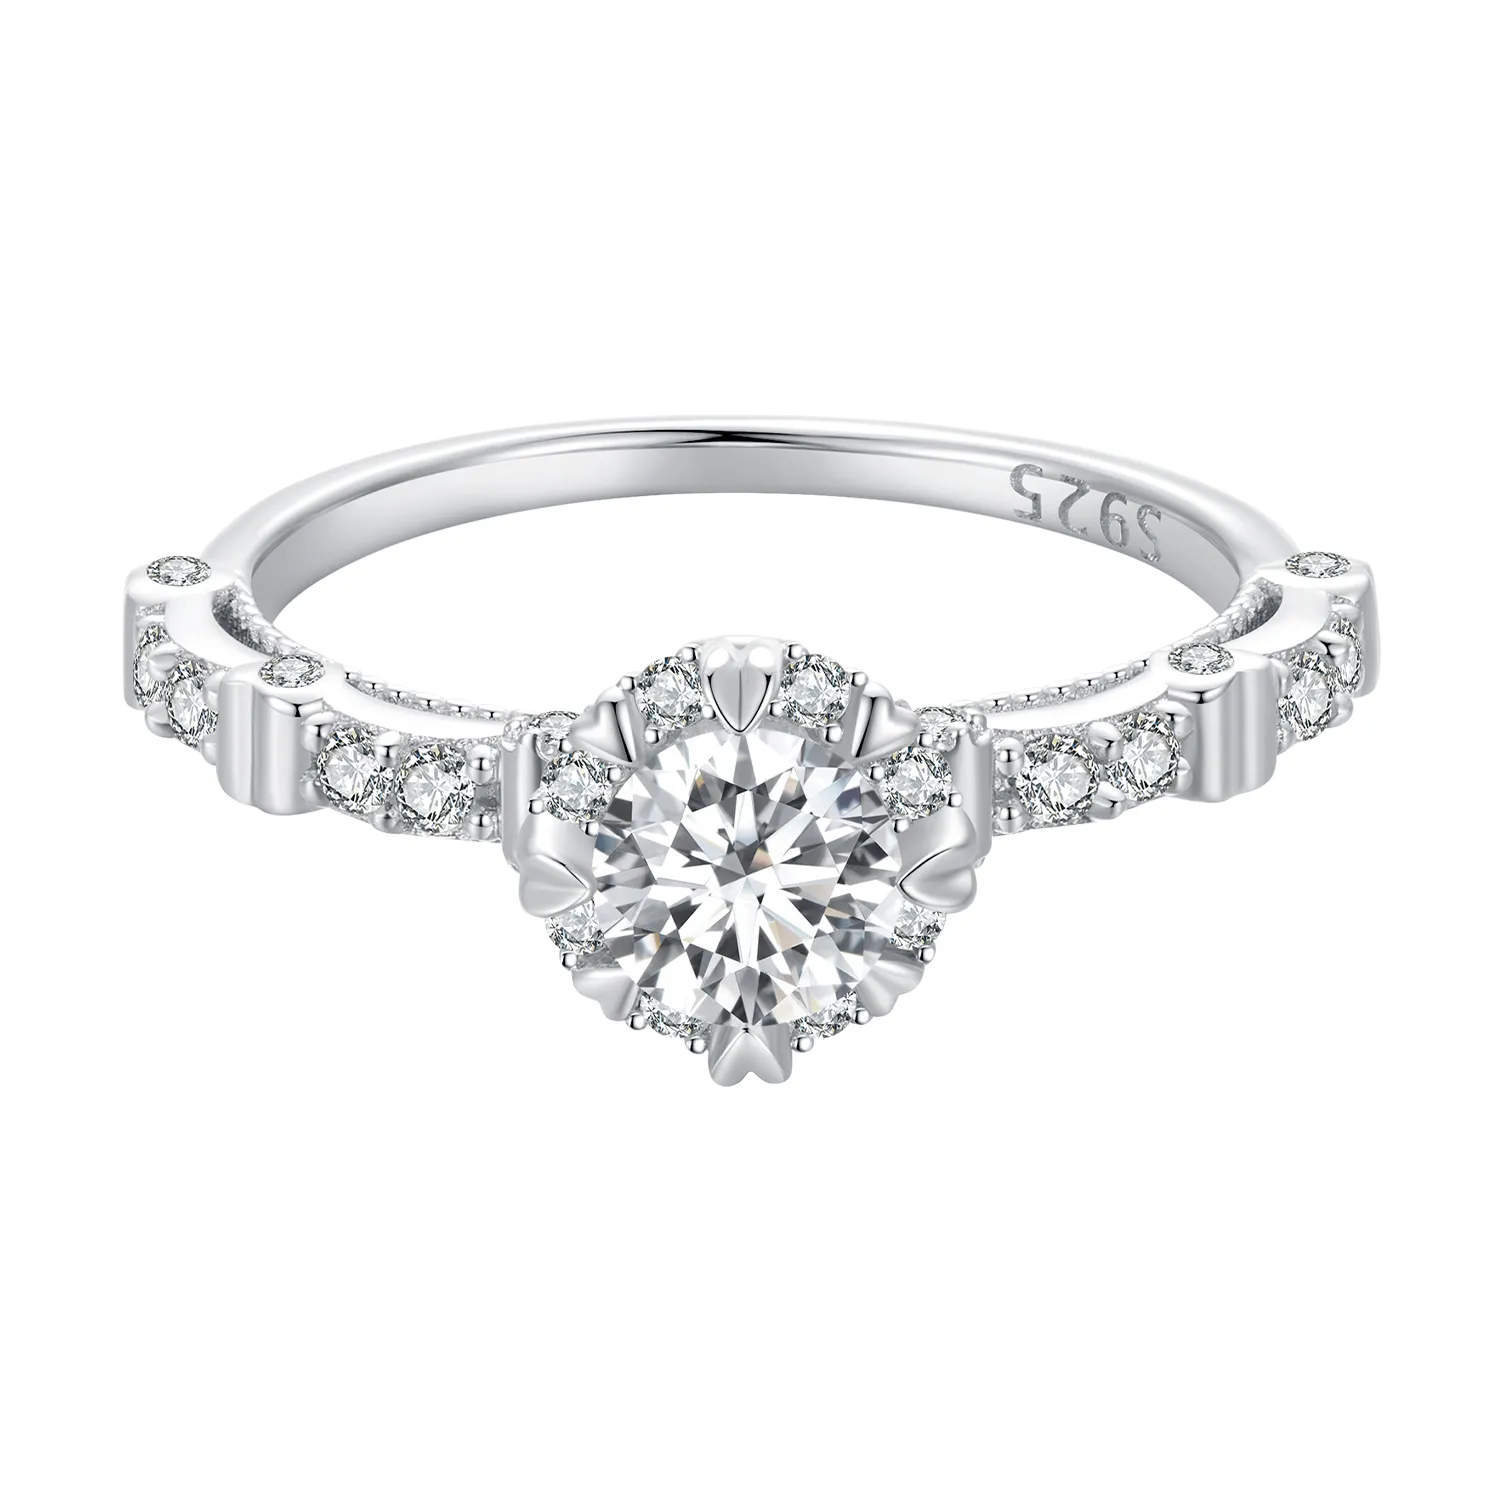 Pandora Style Exquisite Moissanite Ring - MSR023